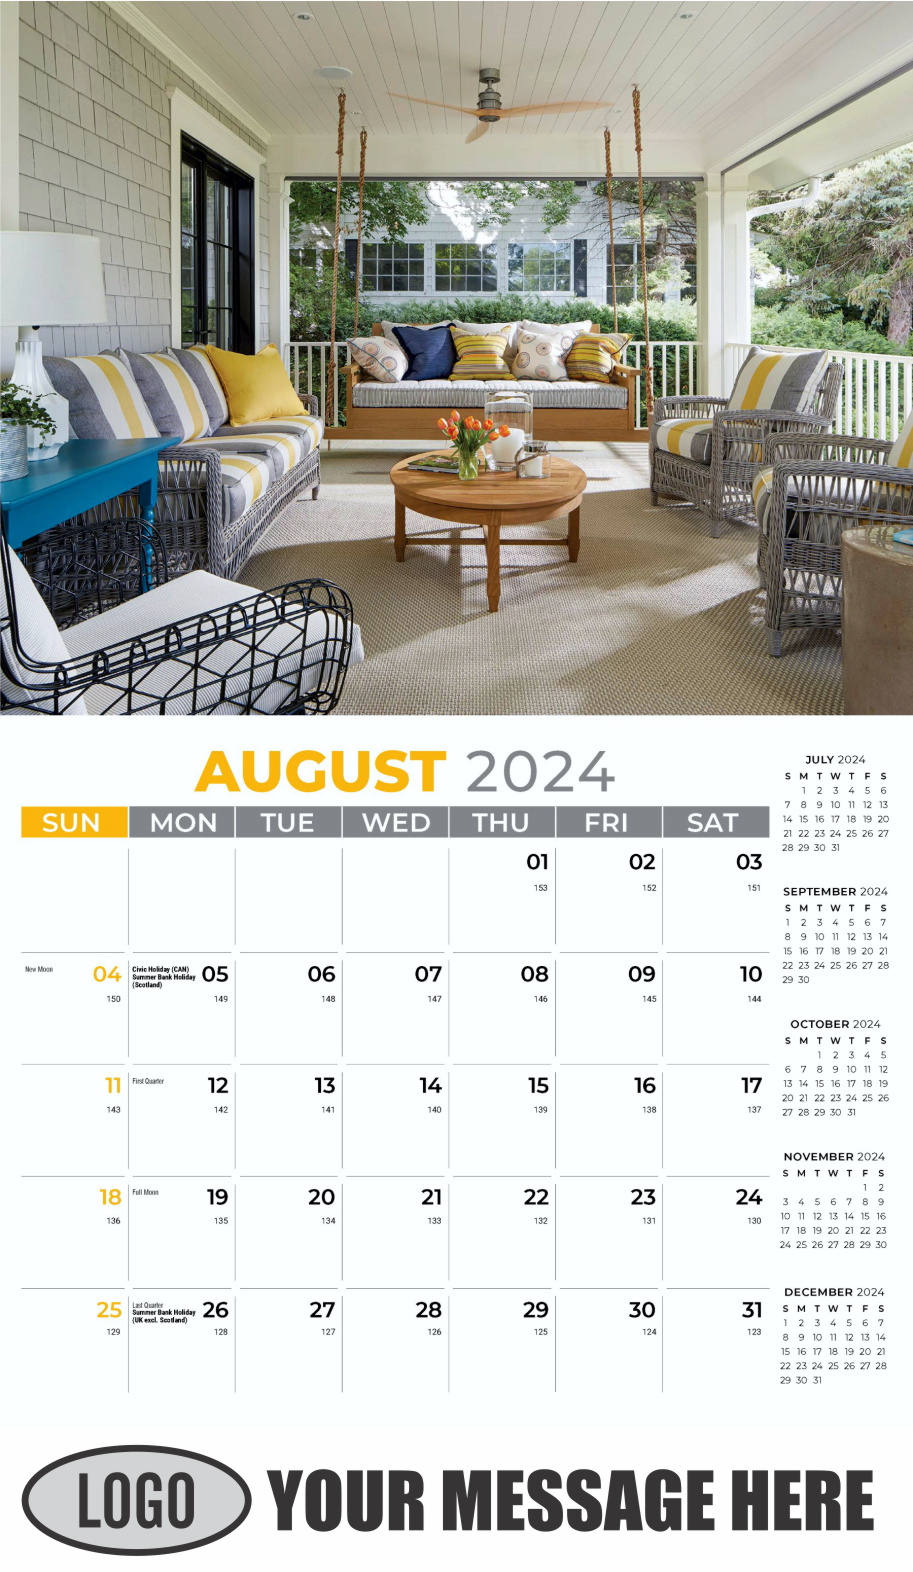 Decor and Design 2024 Interior Design Business Promotional Calendar - August